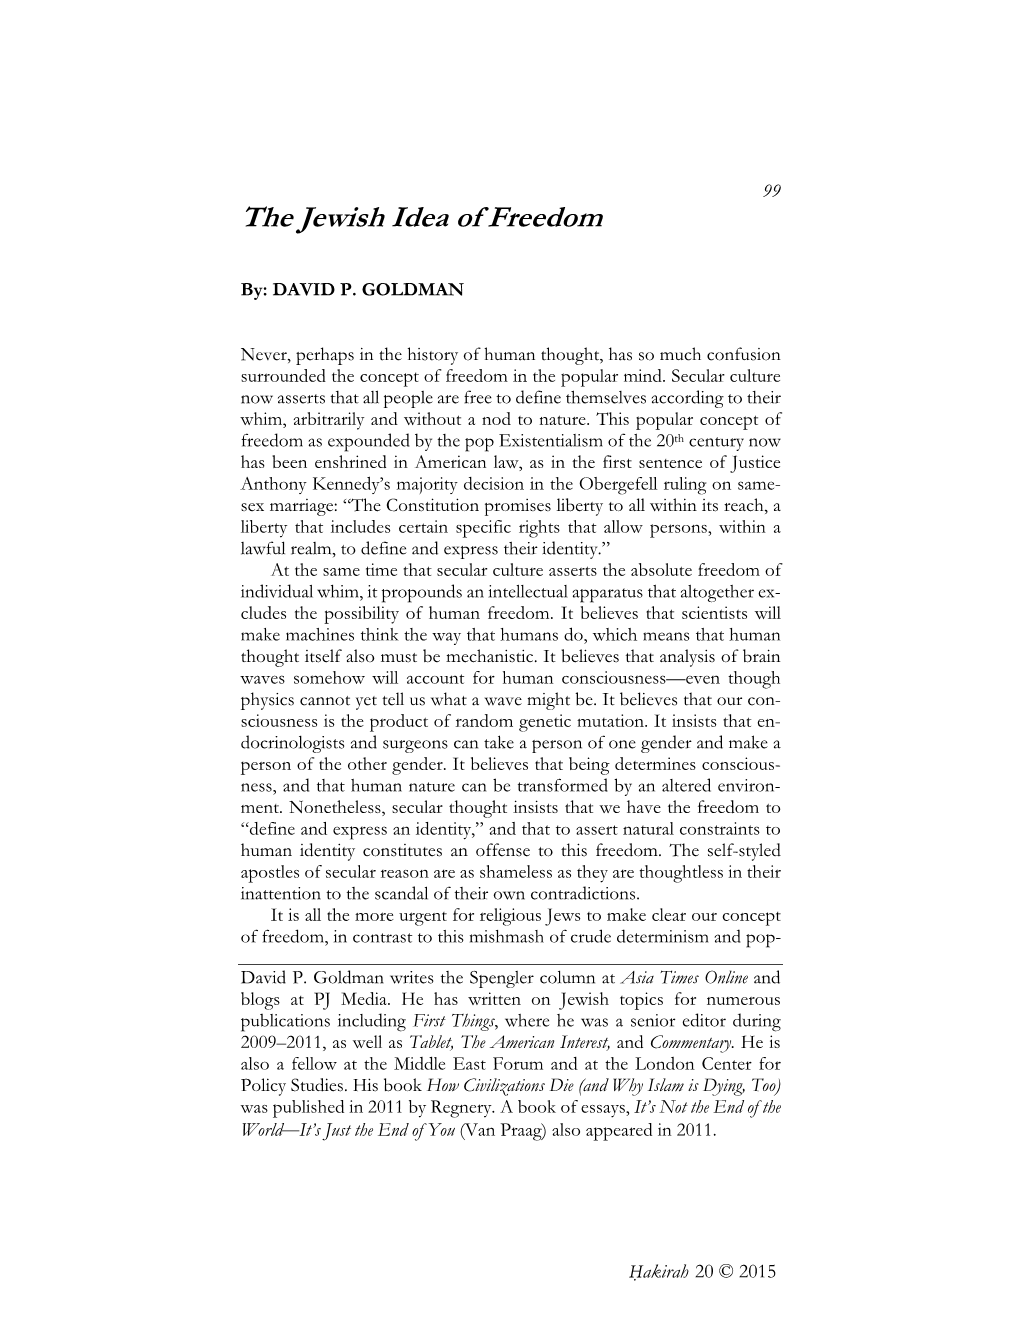 The Jewish Idea of Freedom